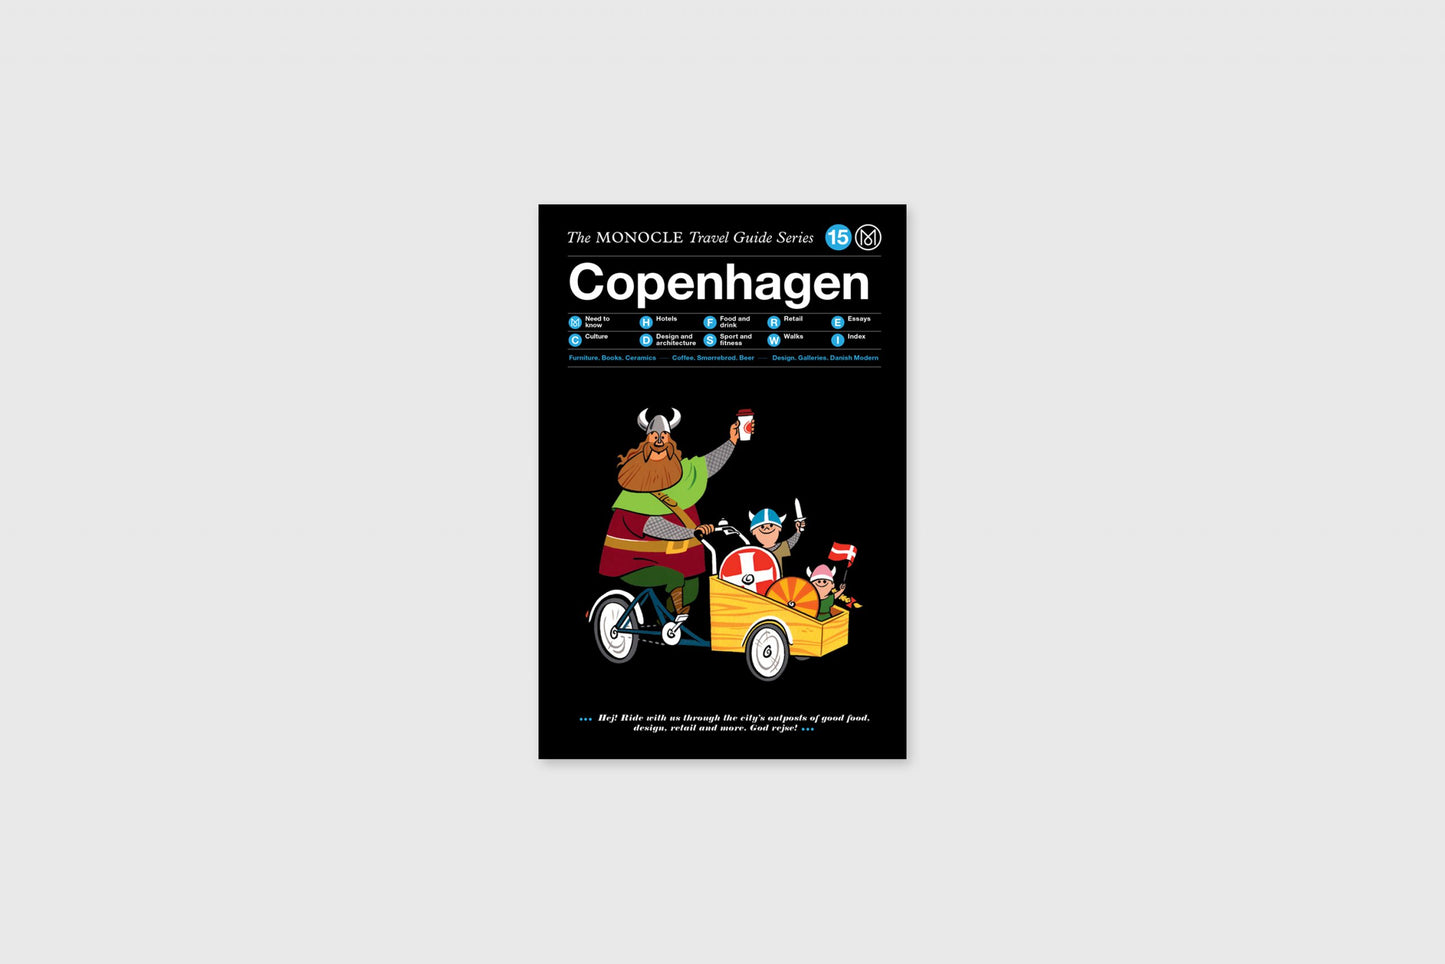 Copenhagen: The Monocle Travel Guide Series